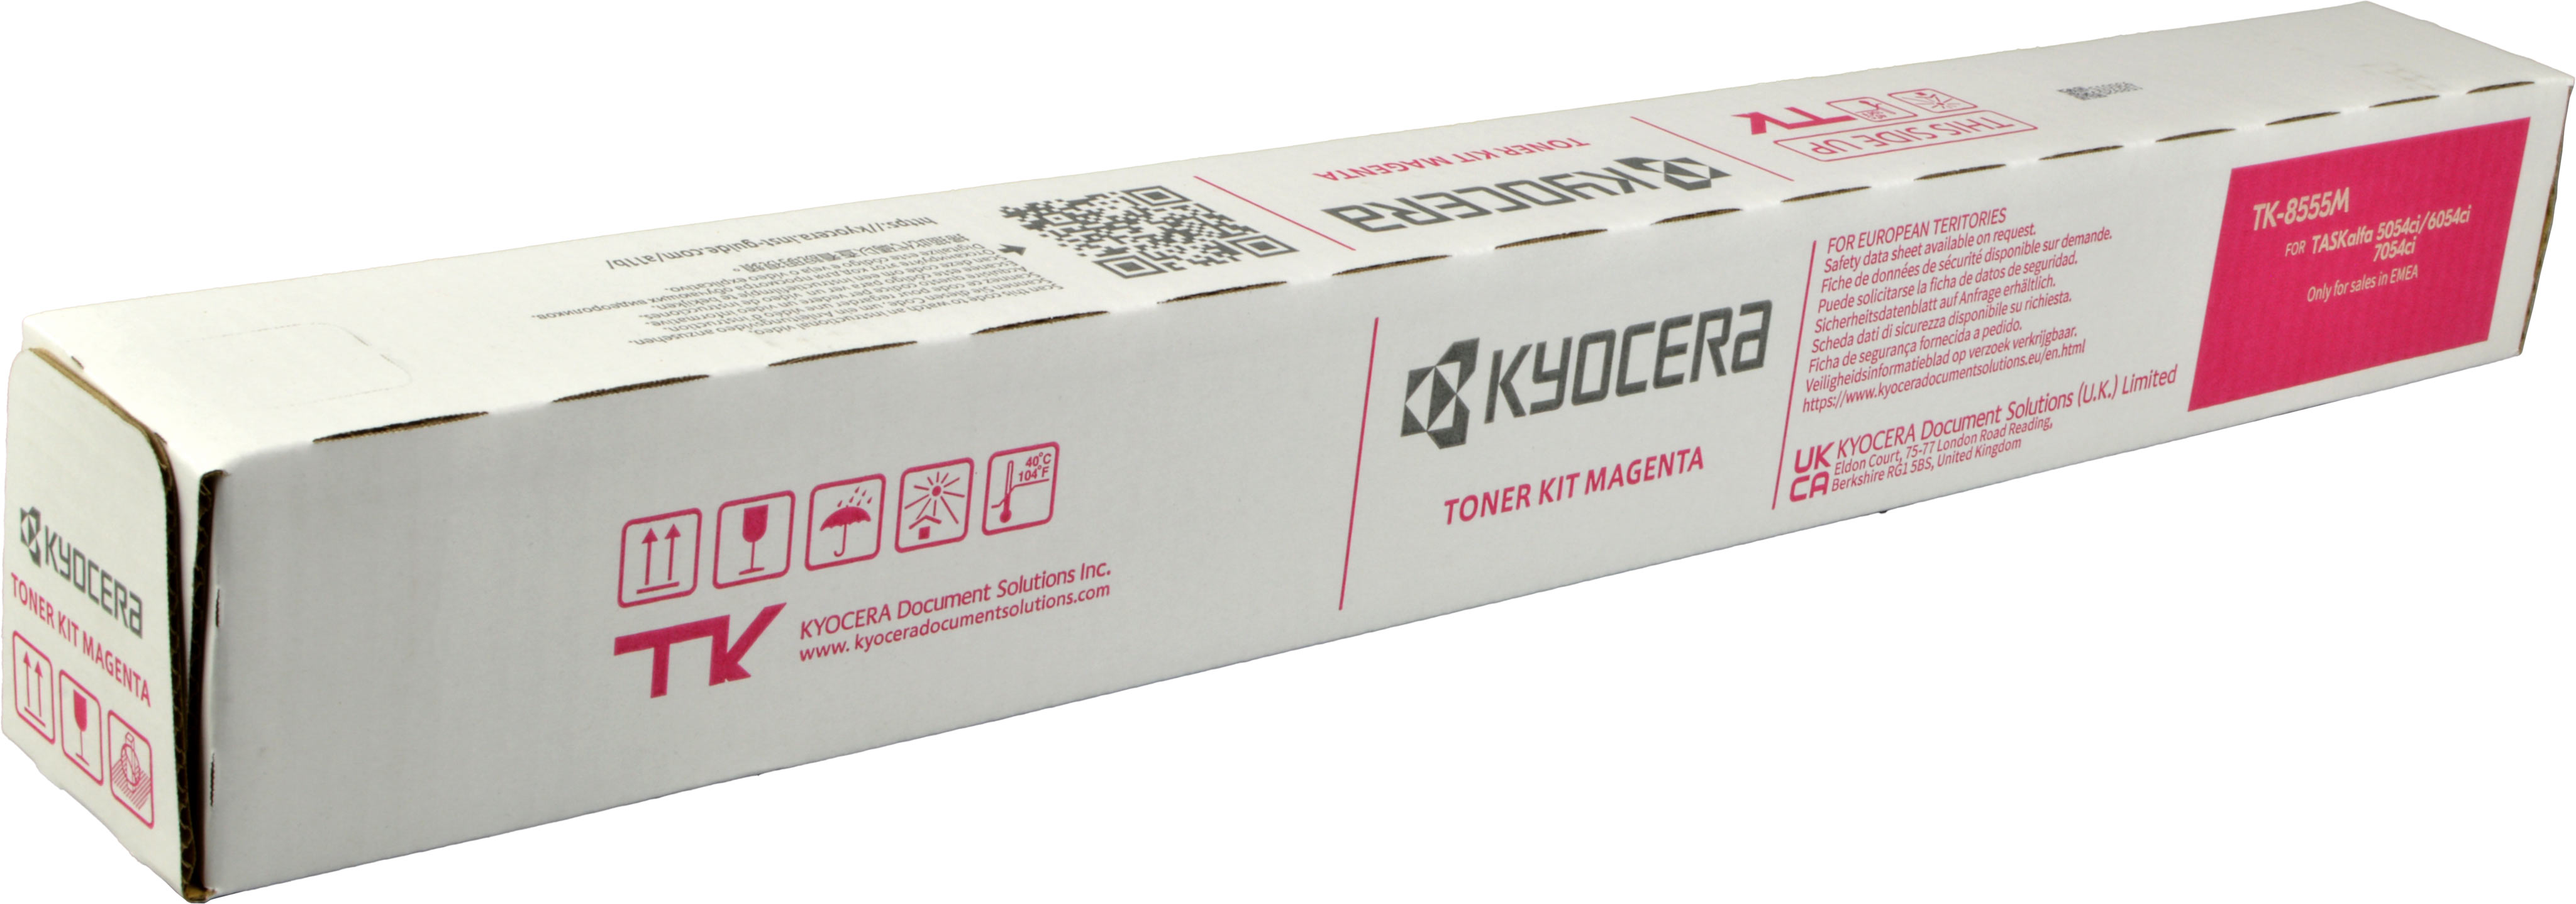 Kyocera Toner TK-8555M  1T02XCBNL0  magenta